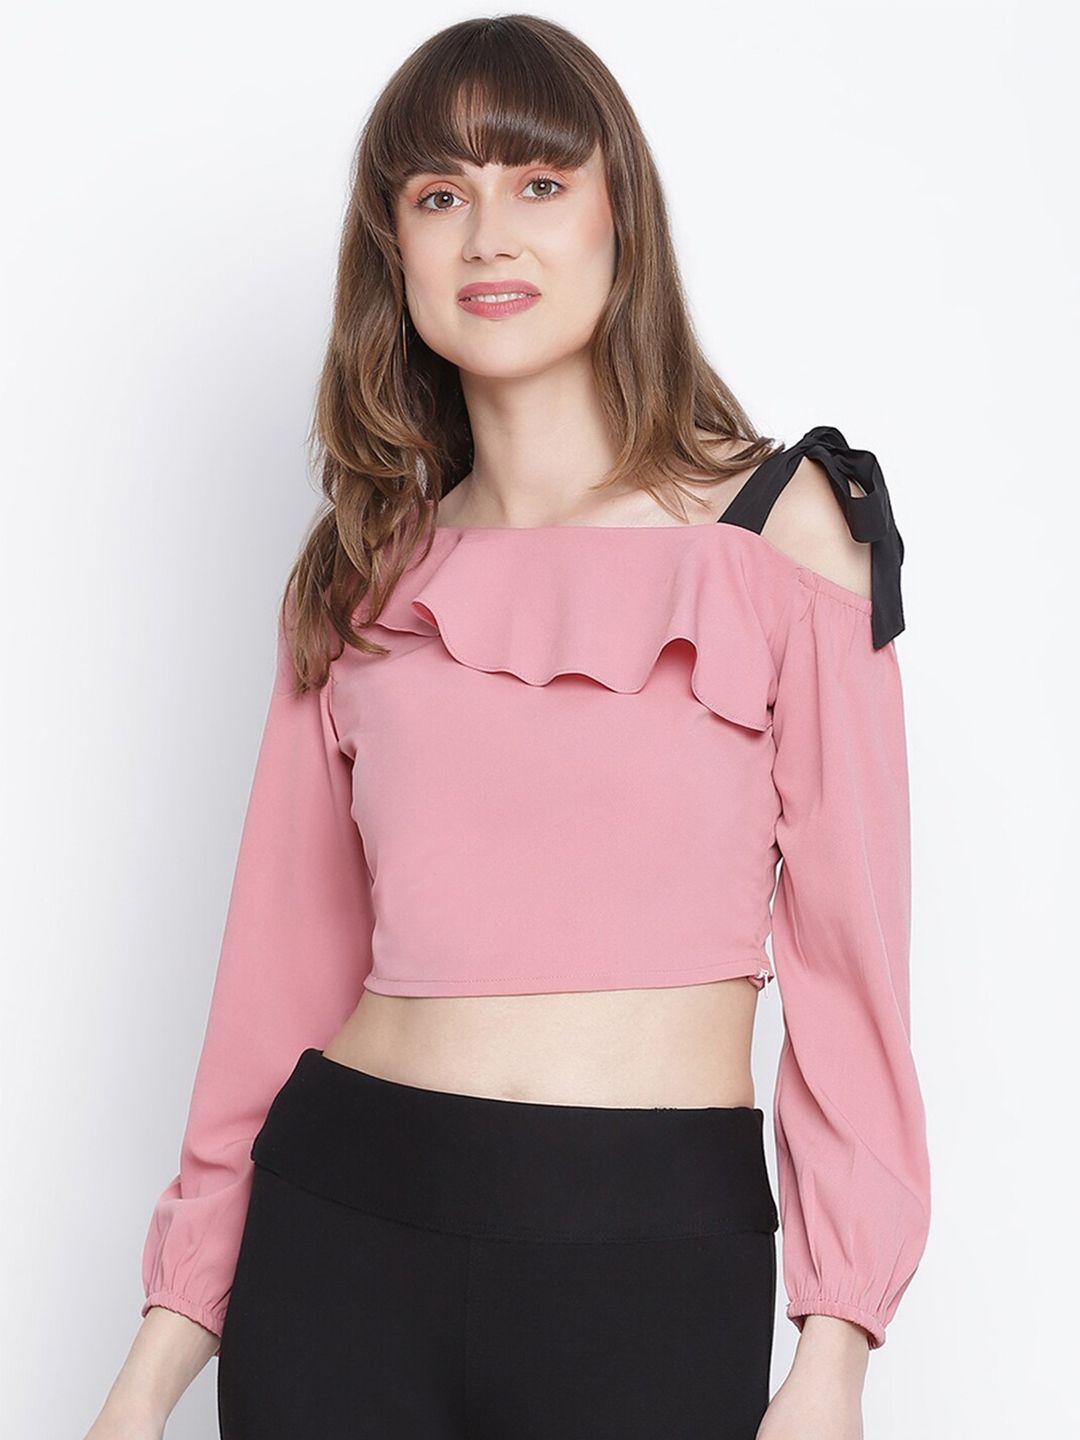 draax fashions women pink layered crop top